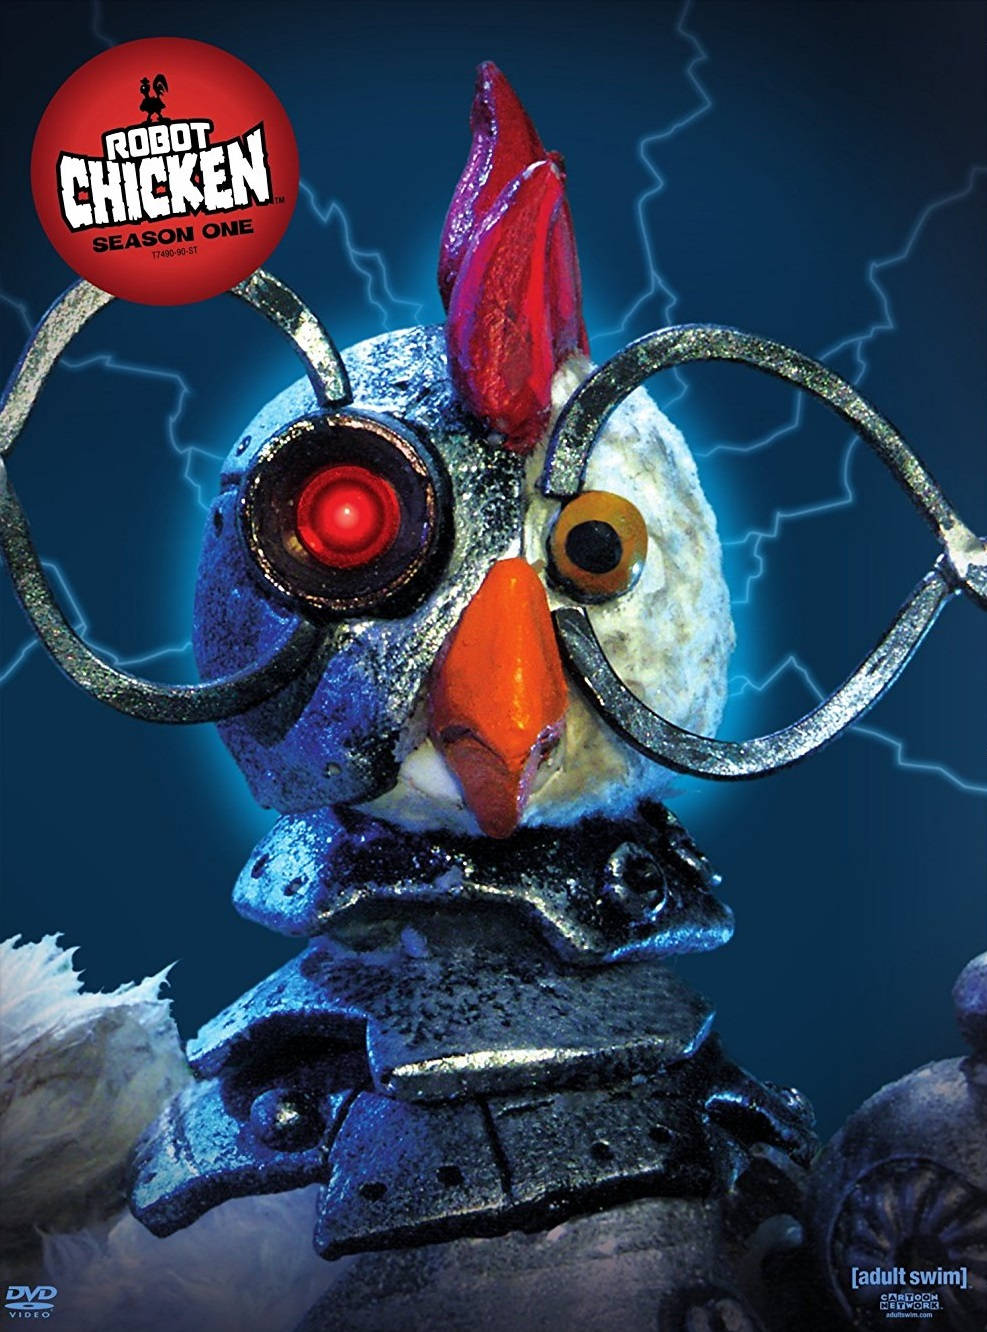 Robot Chicken Season One Poster Wallpaper